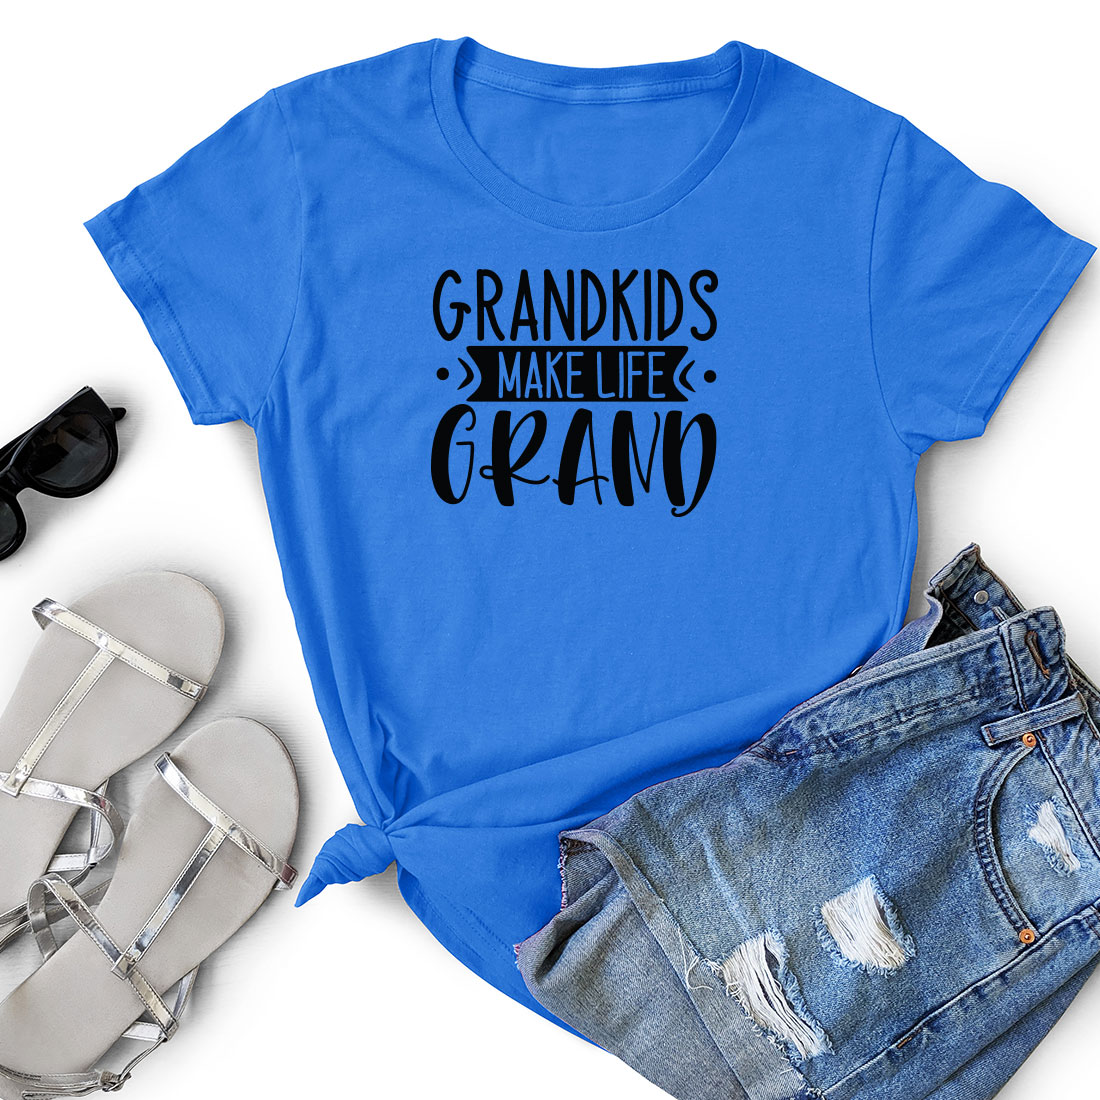 Blue shirt that says grandkids make life grand.